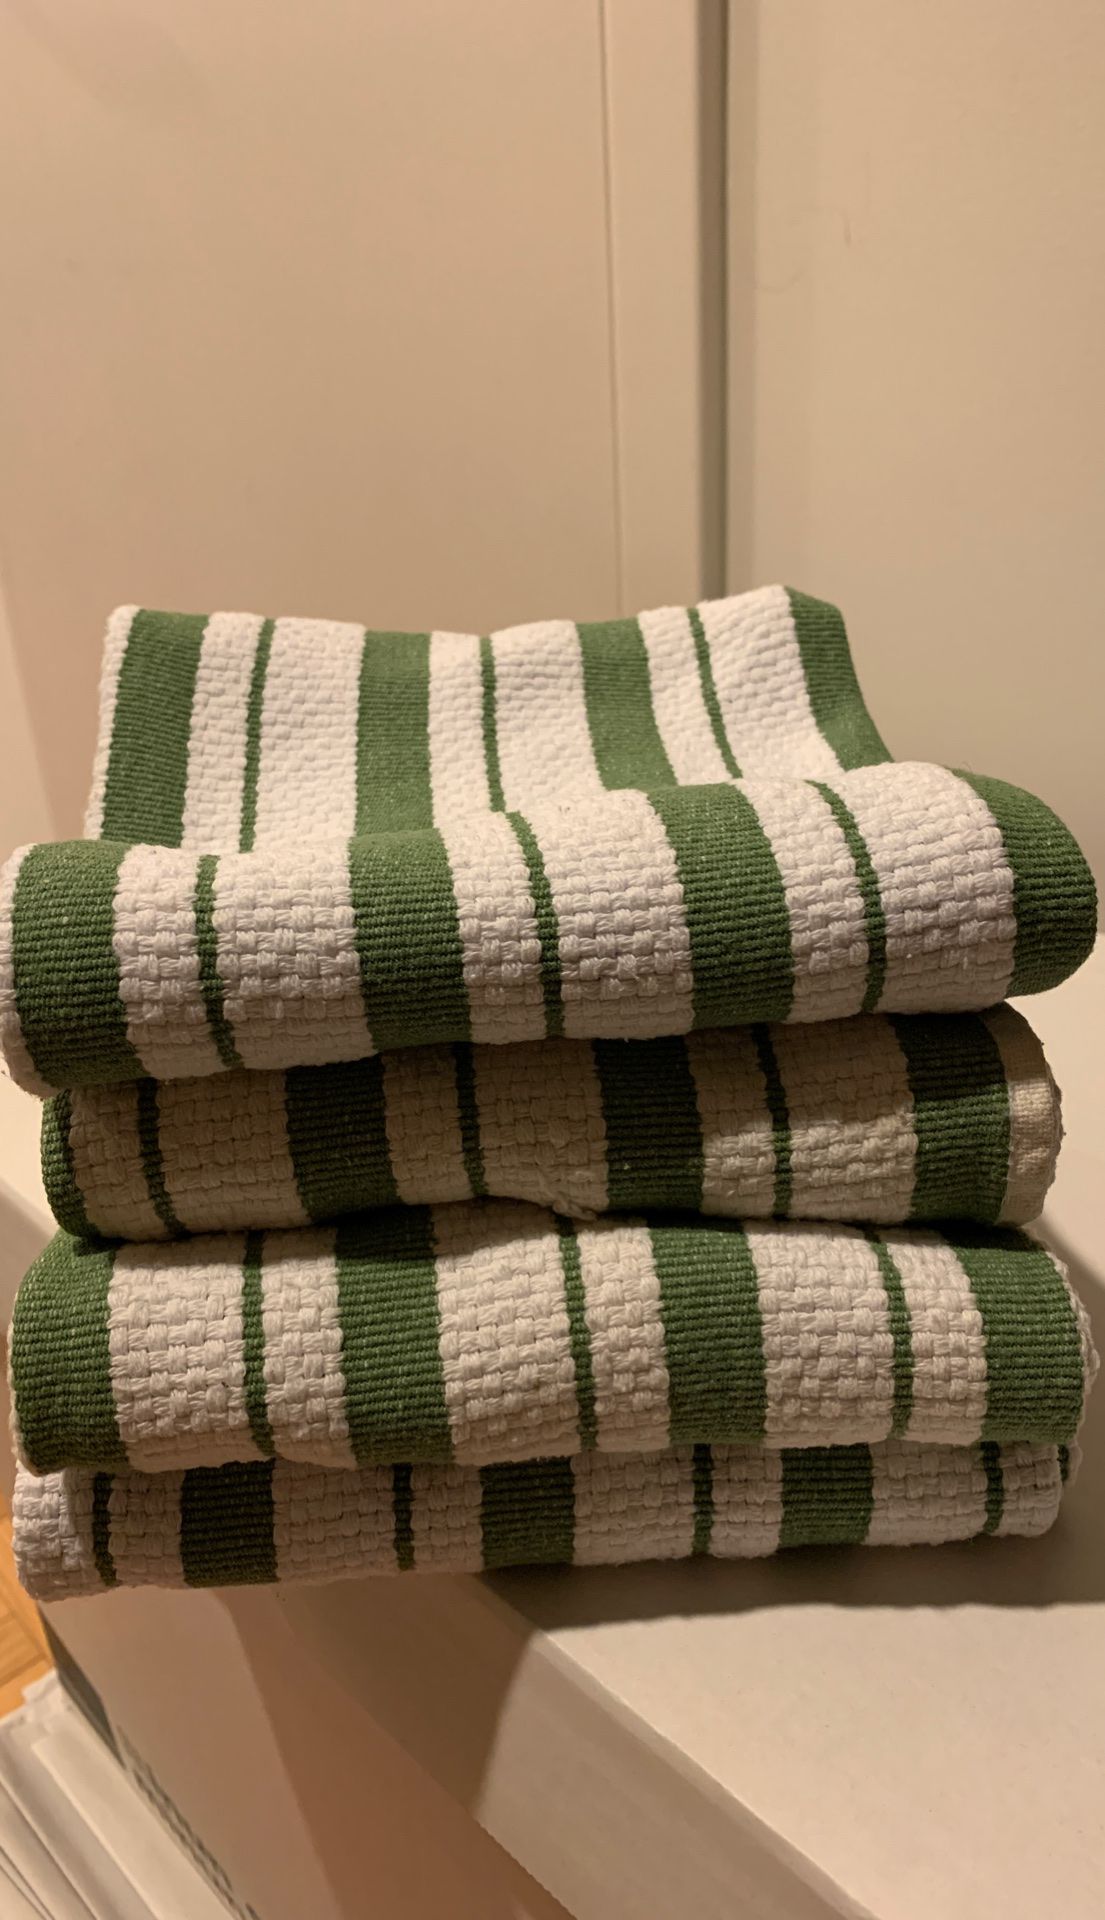 Brand new Williams Sonoma kitchen towel